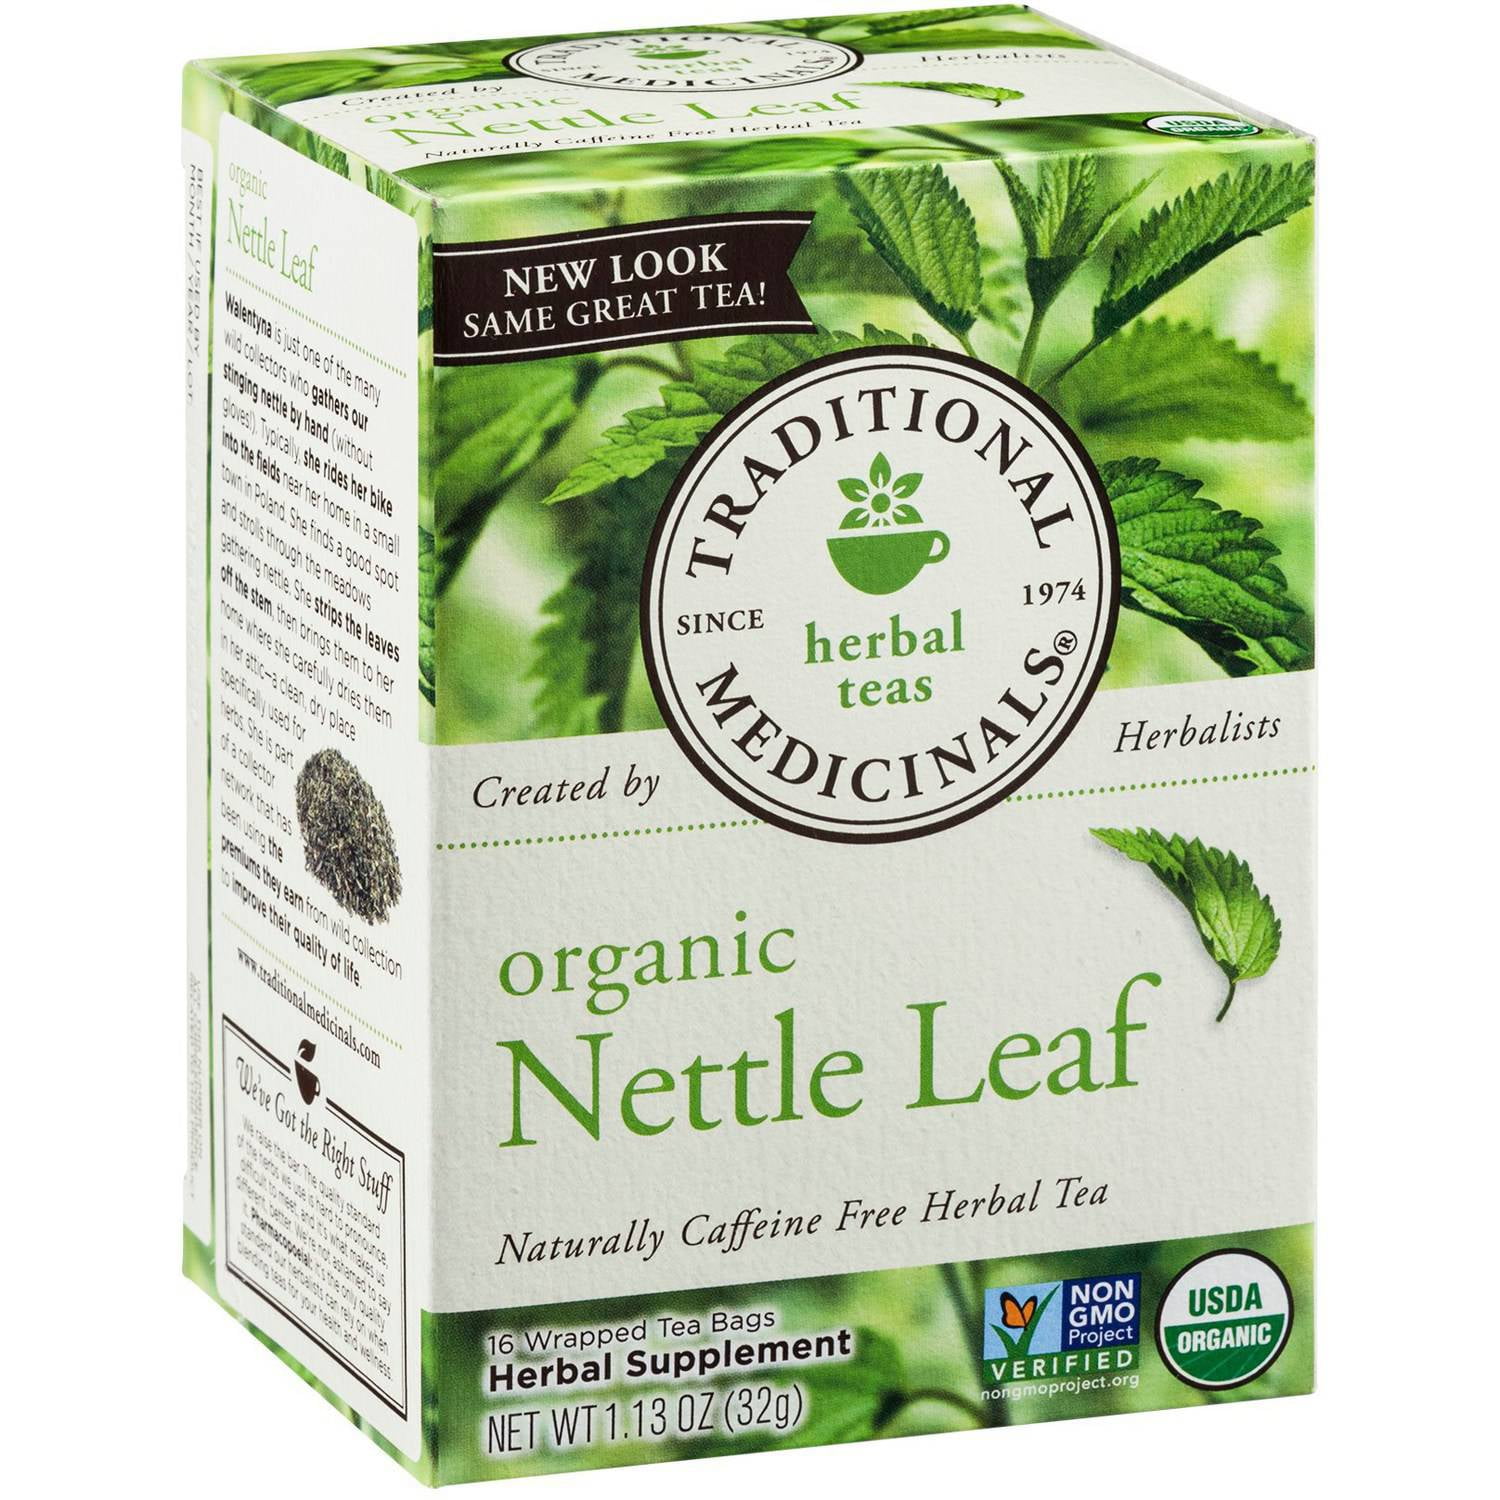 Traditional Medicinals Organic Nettle Leaf Herbal Supplement Tea, 16